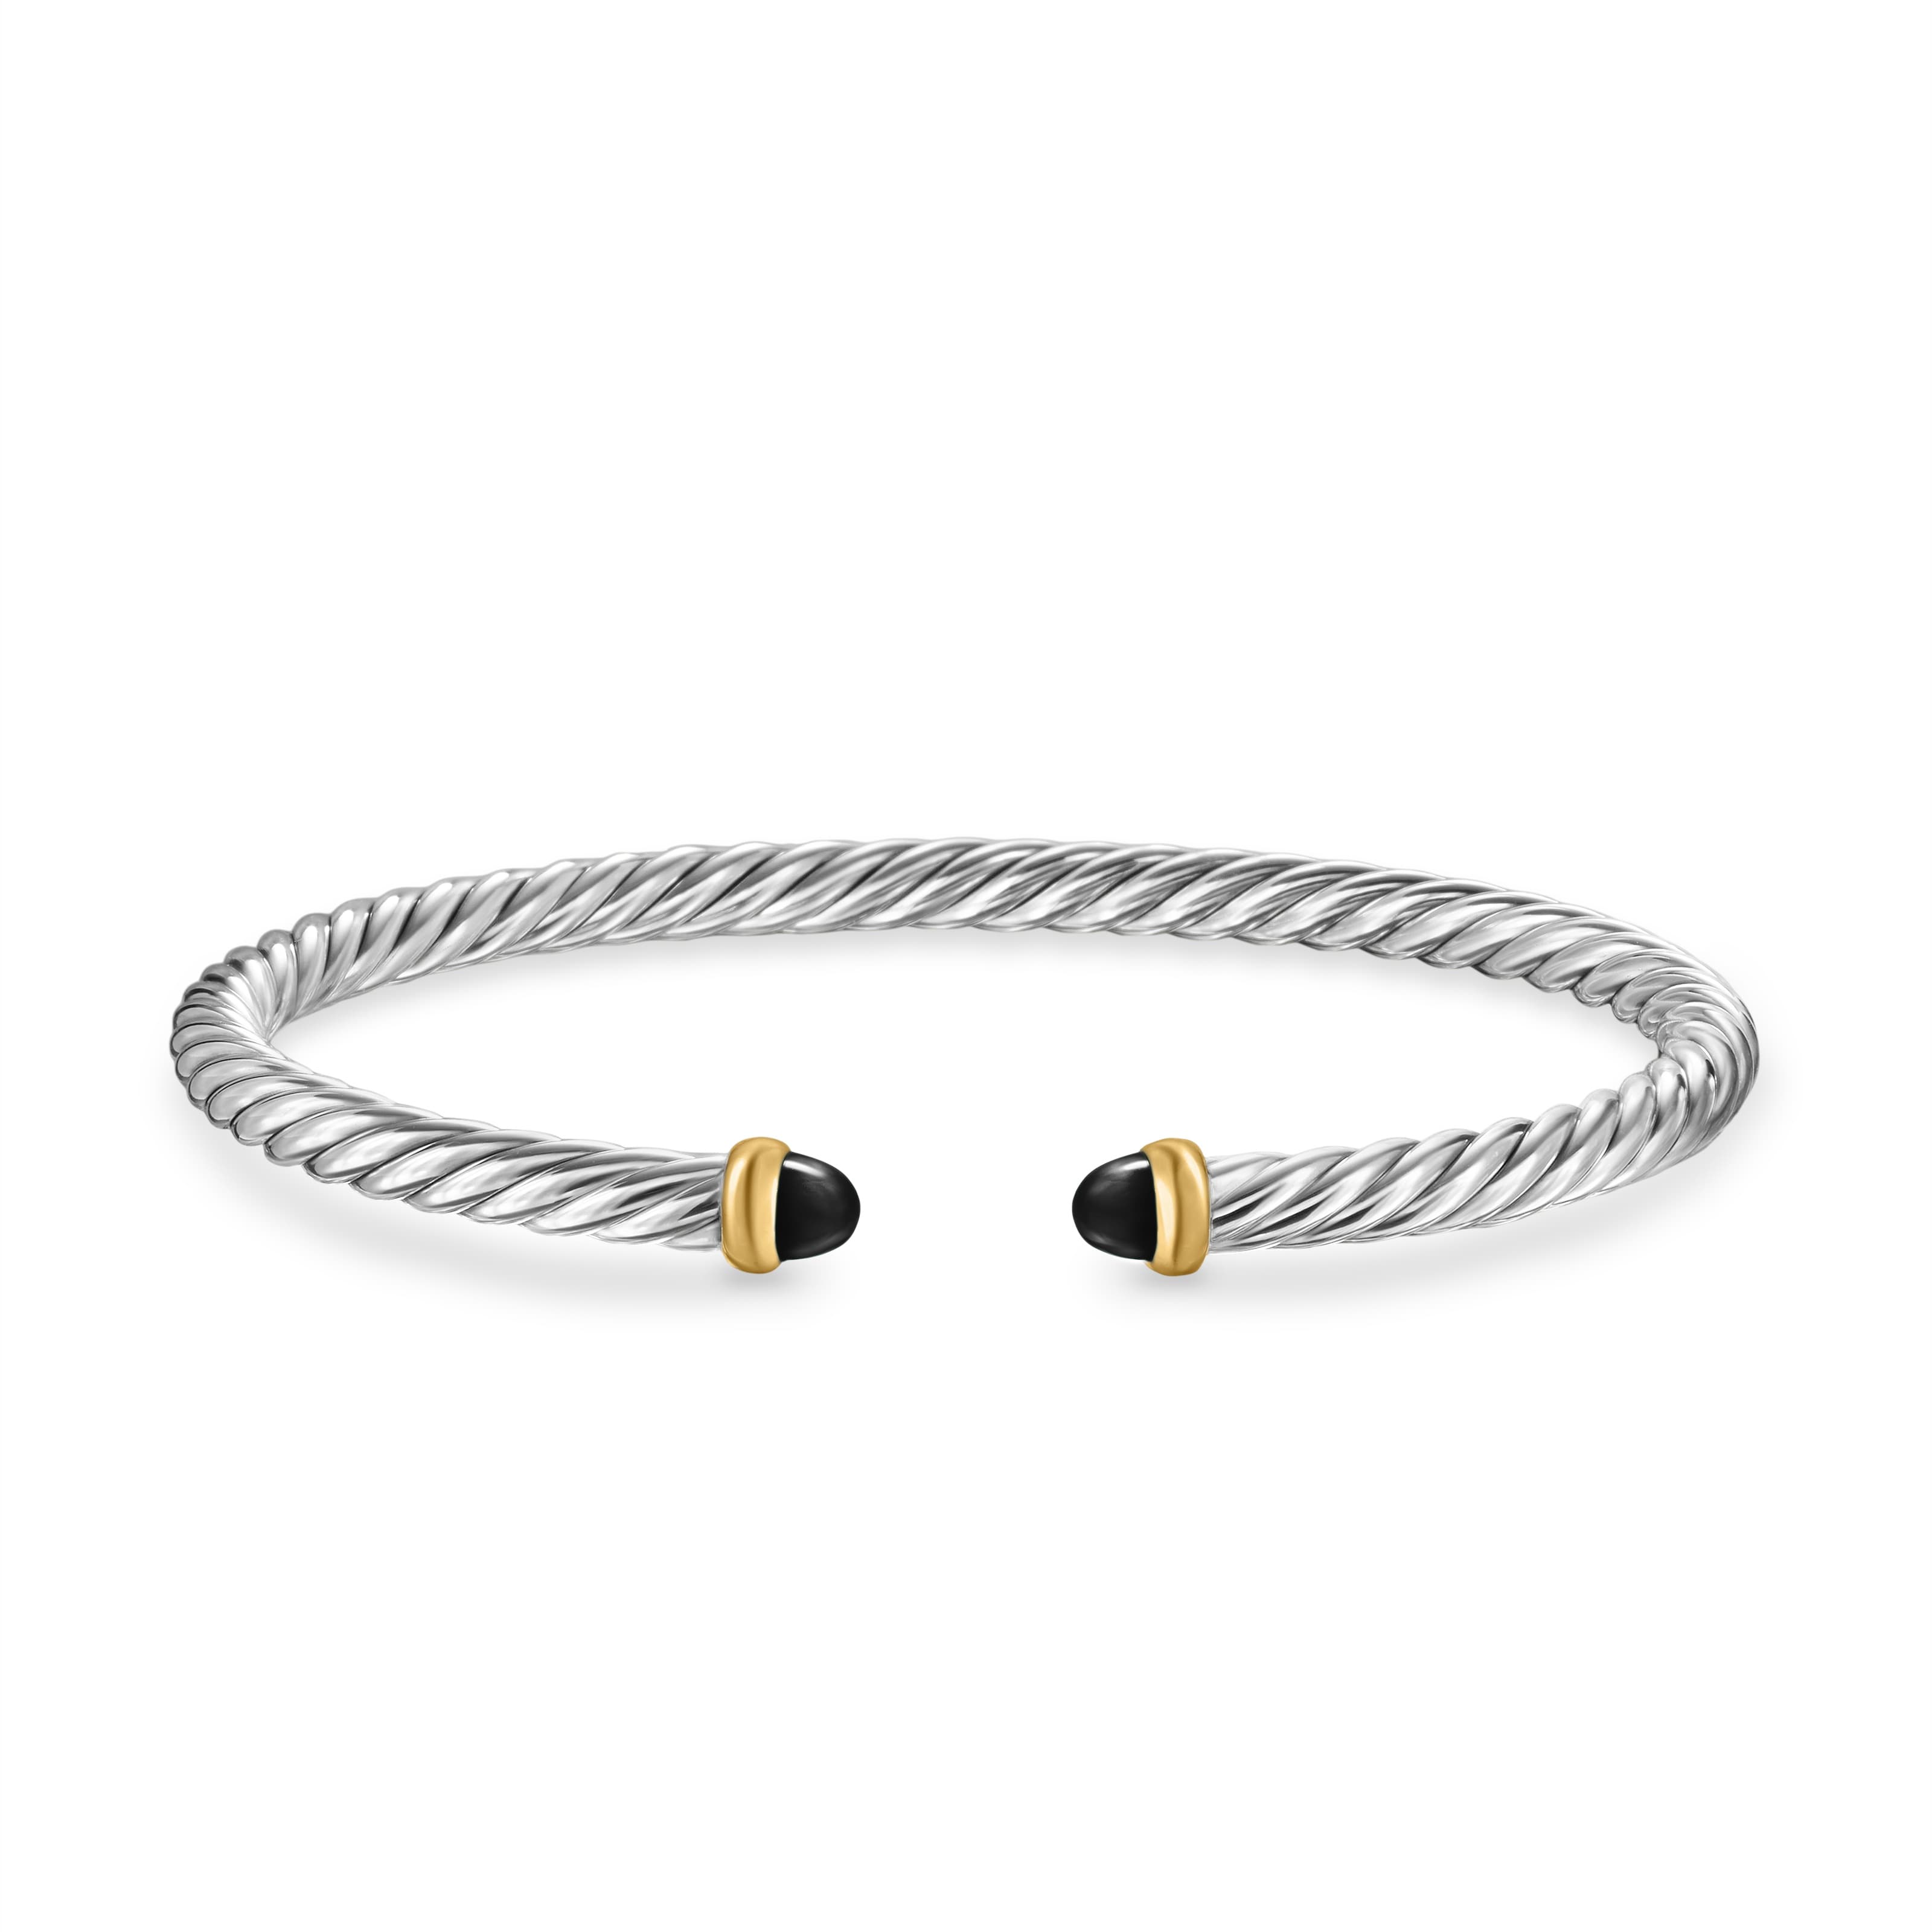 David Yurman Cable Flex Sterling Silver Bracelet with Black Onyx, Size Medium 2